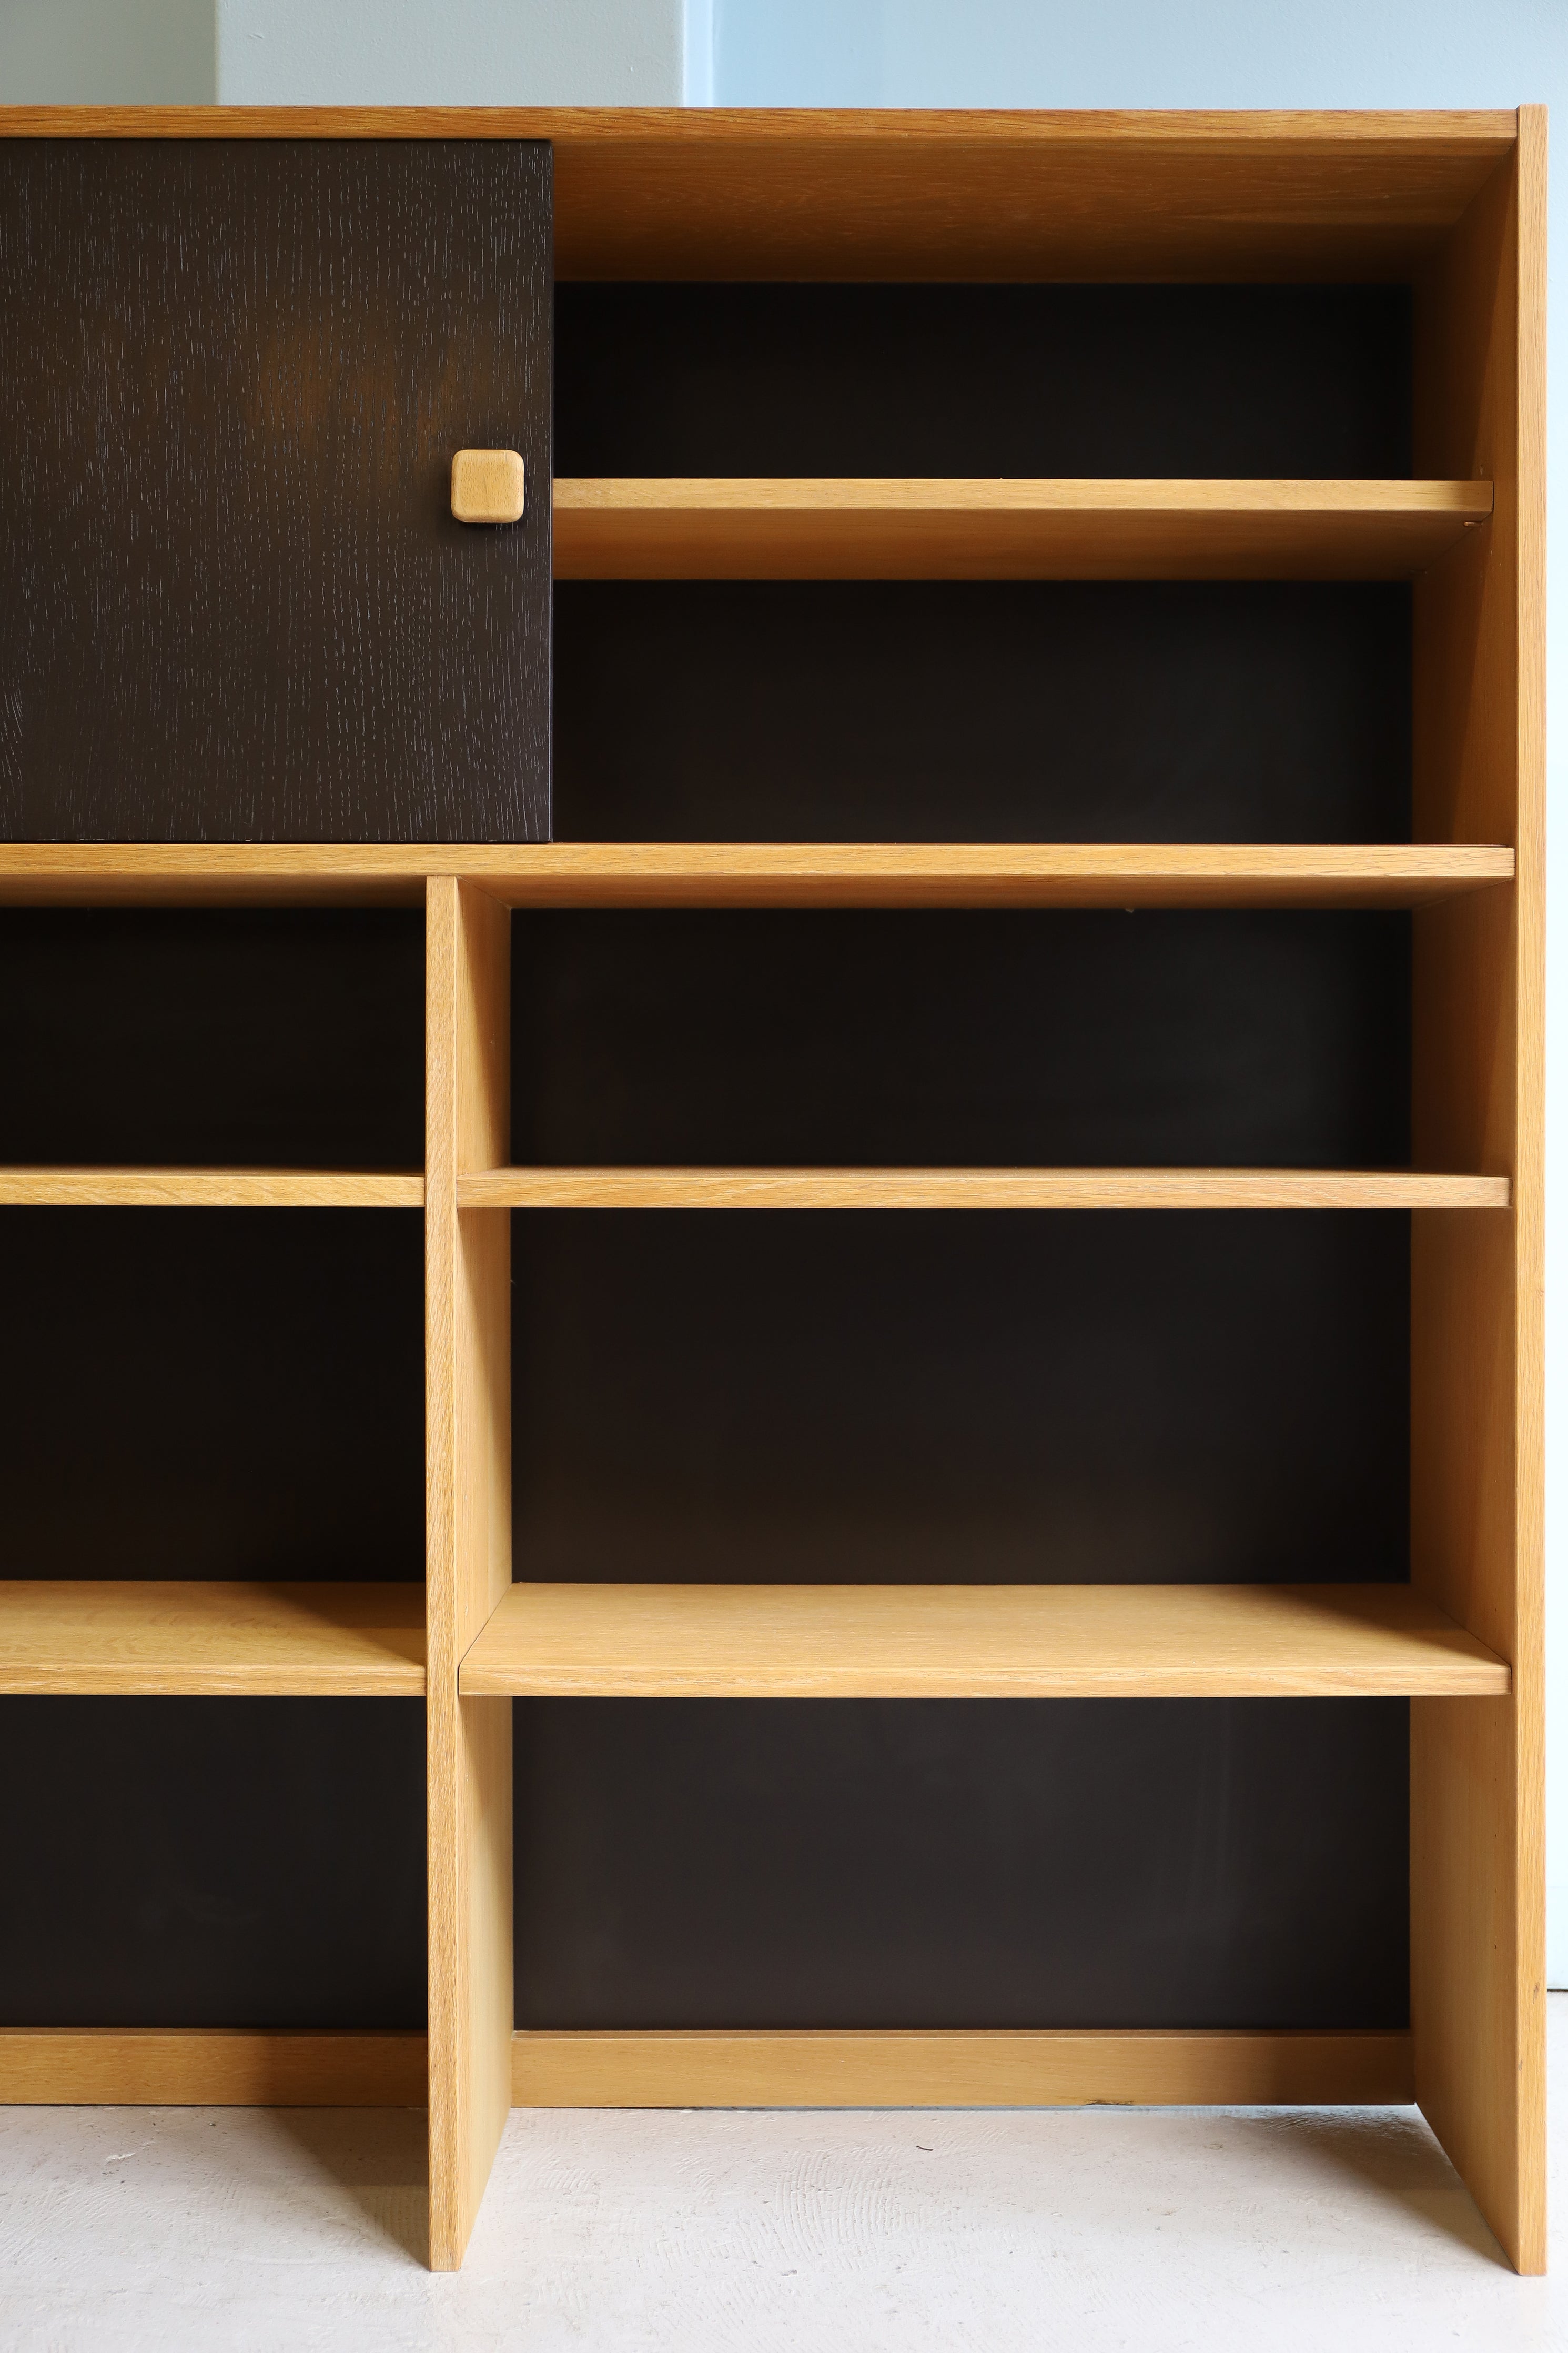 Domino Møbler Bookcase Shelf Danish Vintage/デンマークヴィンテージ ドミノモブラー ブックケース シェルフ 収納 北欧家具